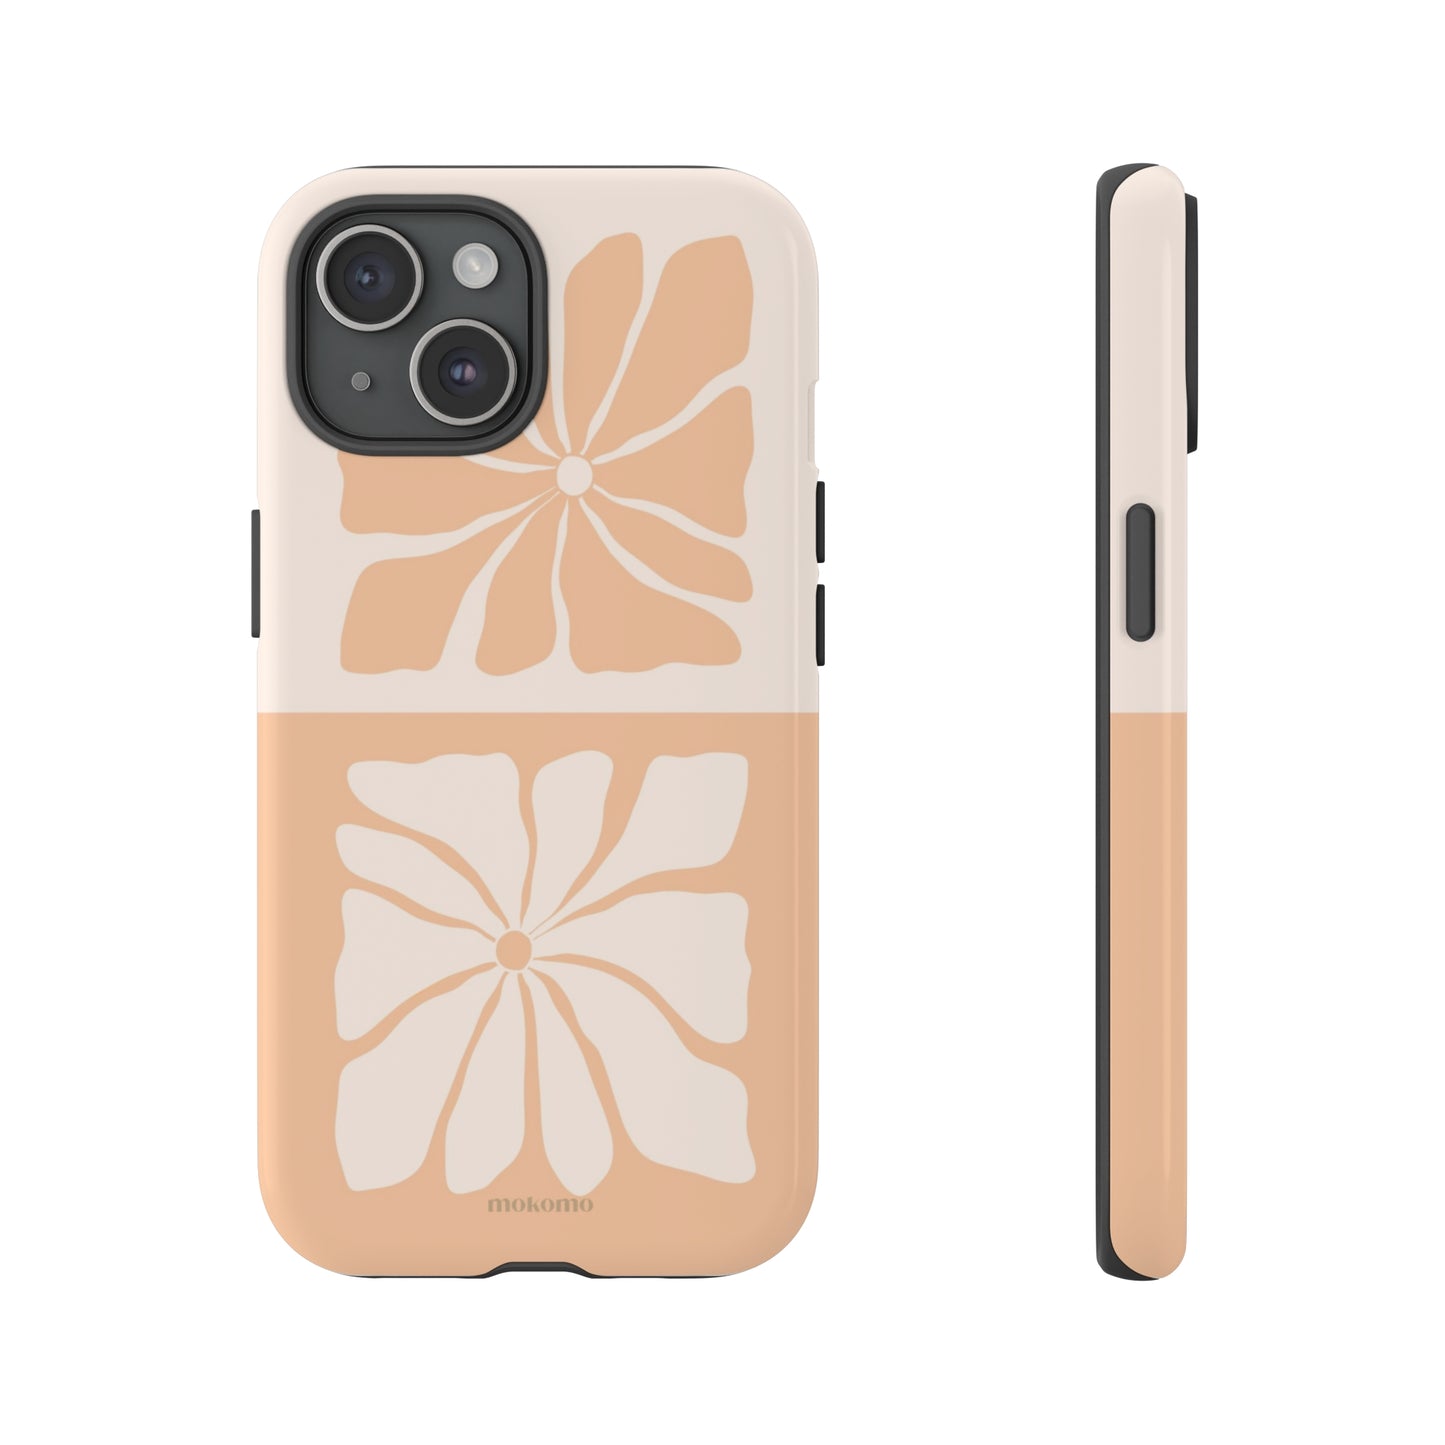 Pastel Orange and white mirrored flower design on an phone case